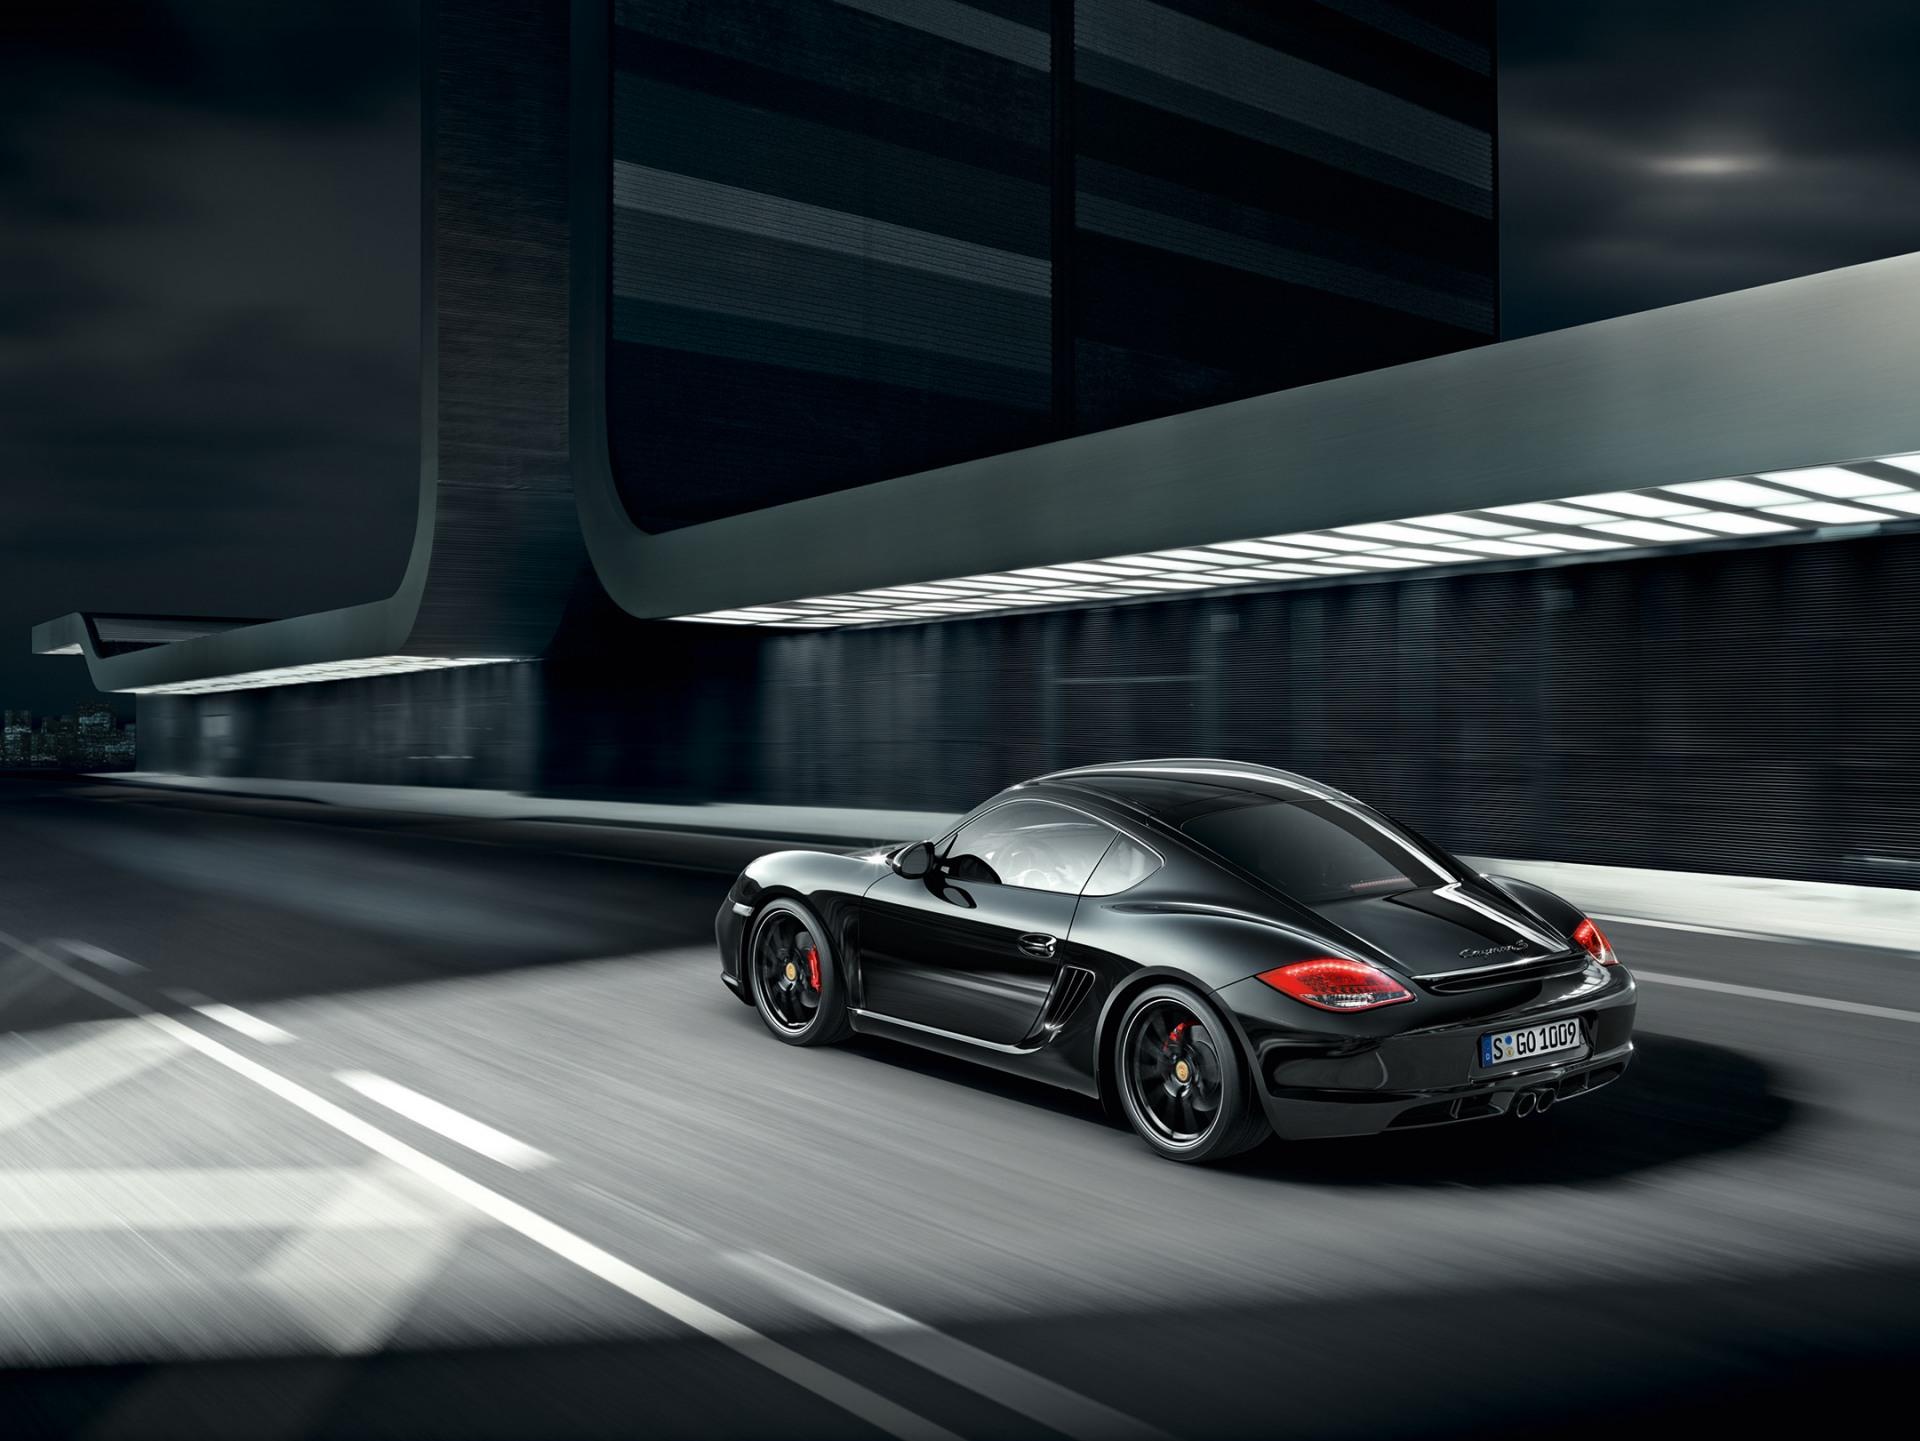 2012 Porsche Cayman S Black Edition